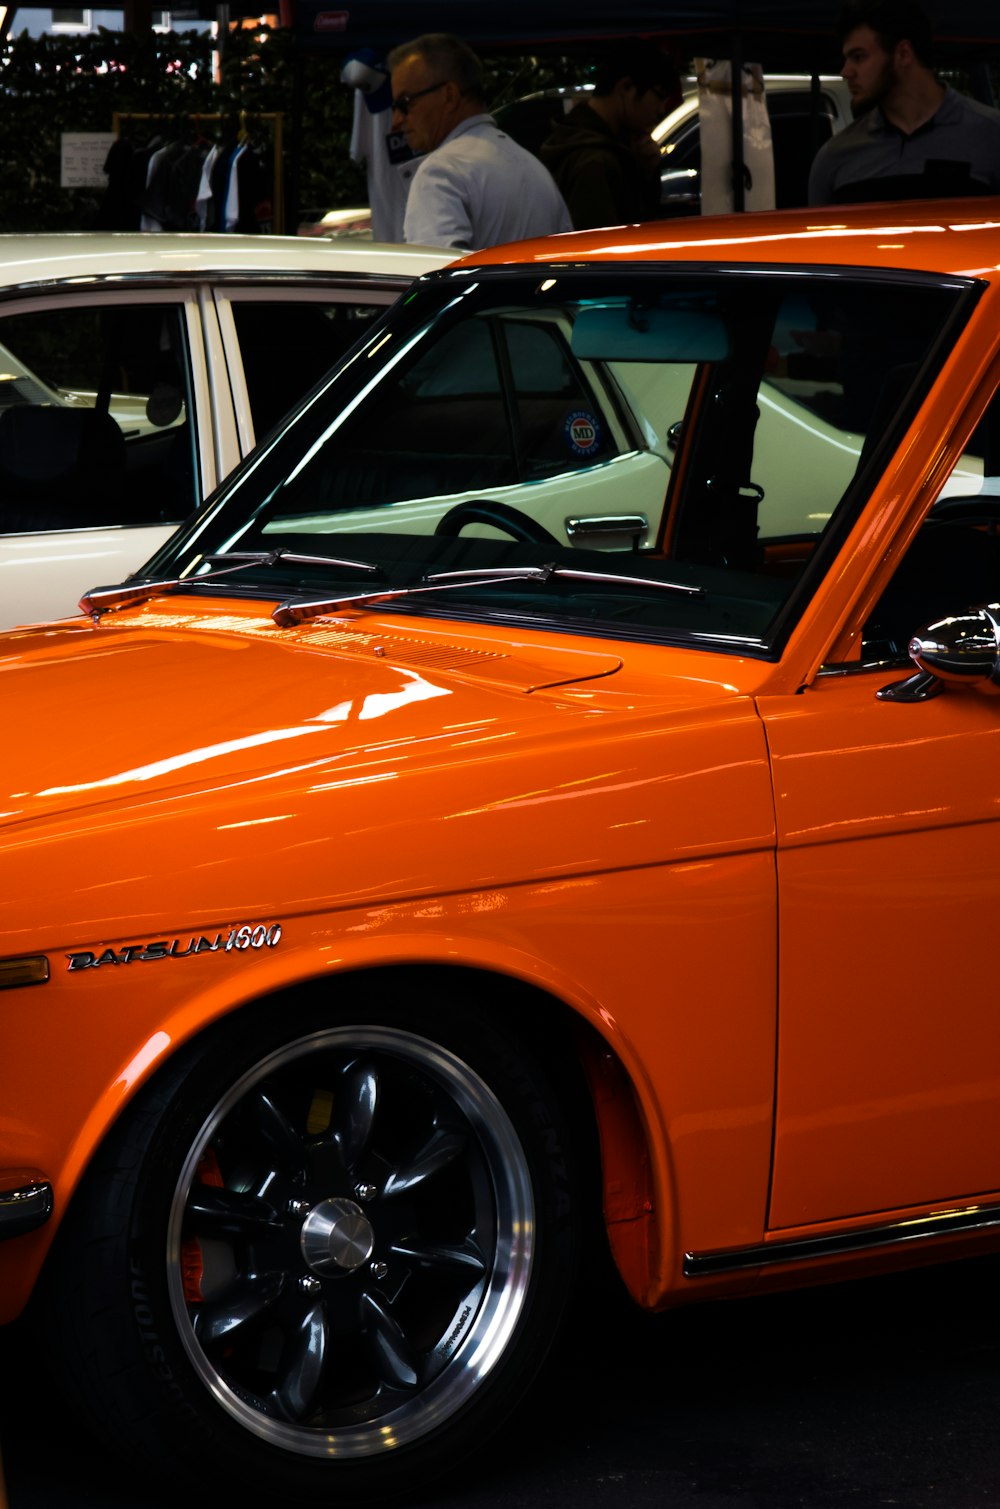 an orange car parked next to a white car